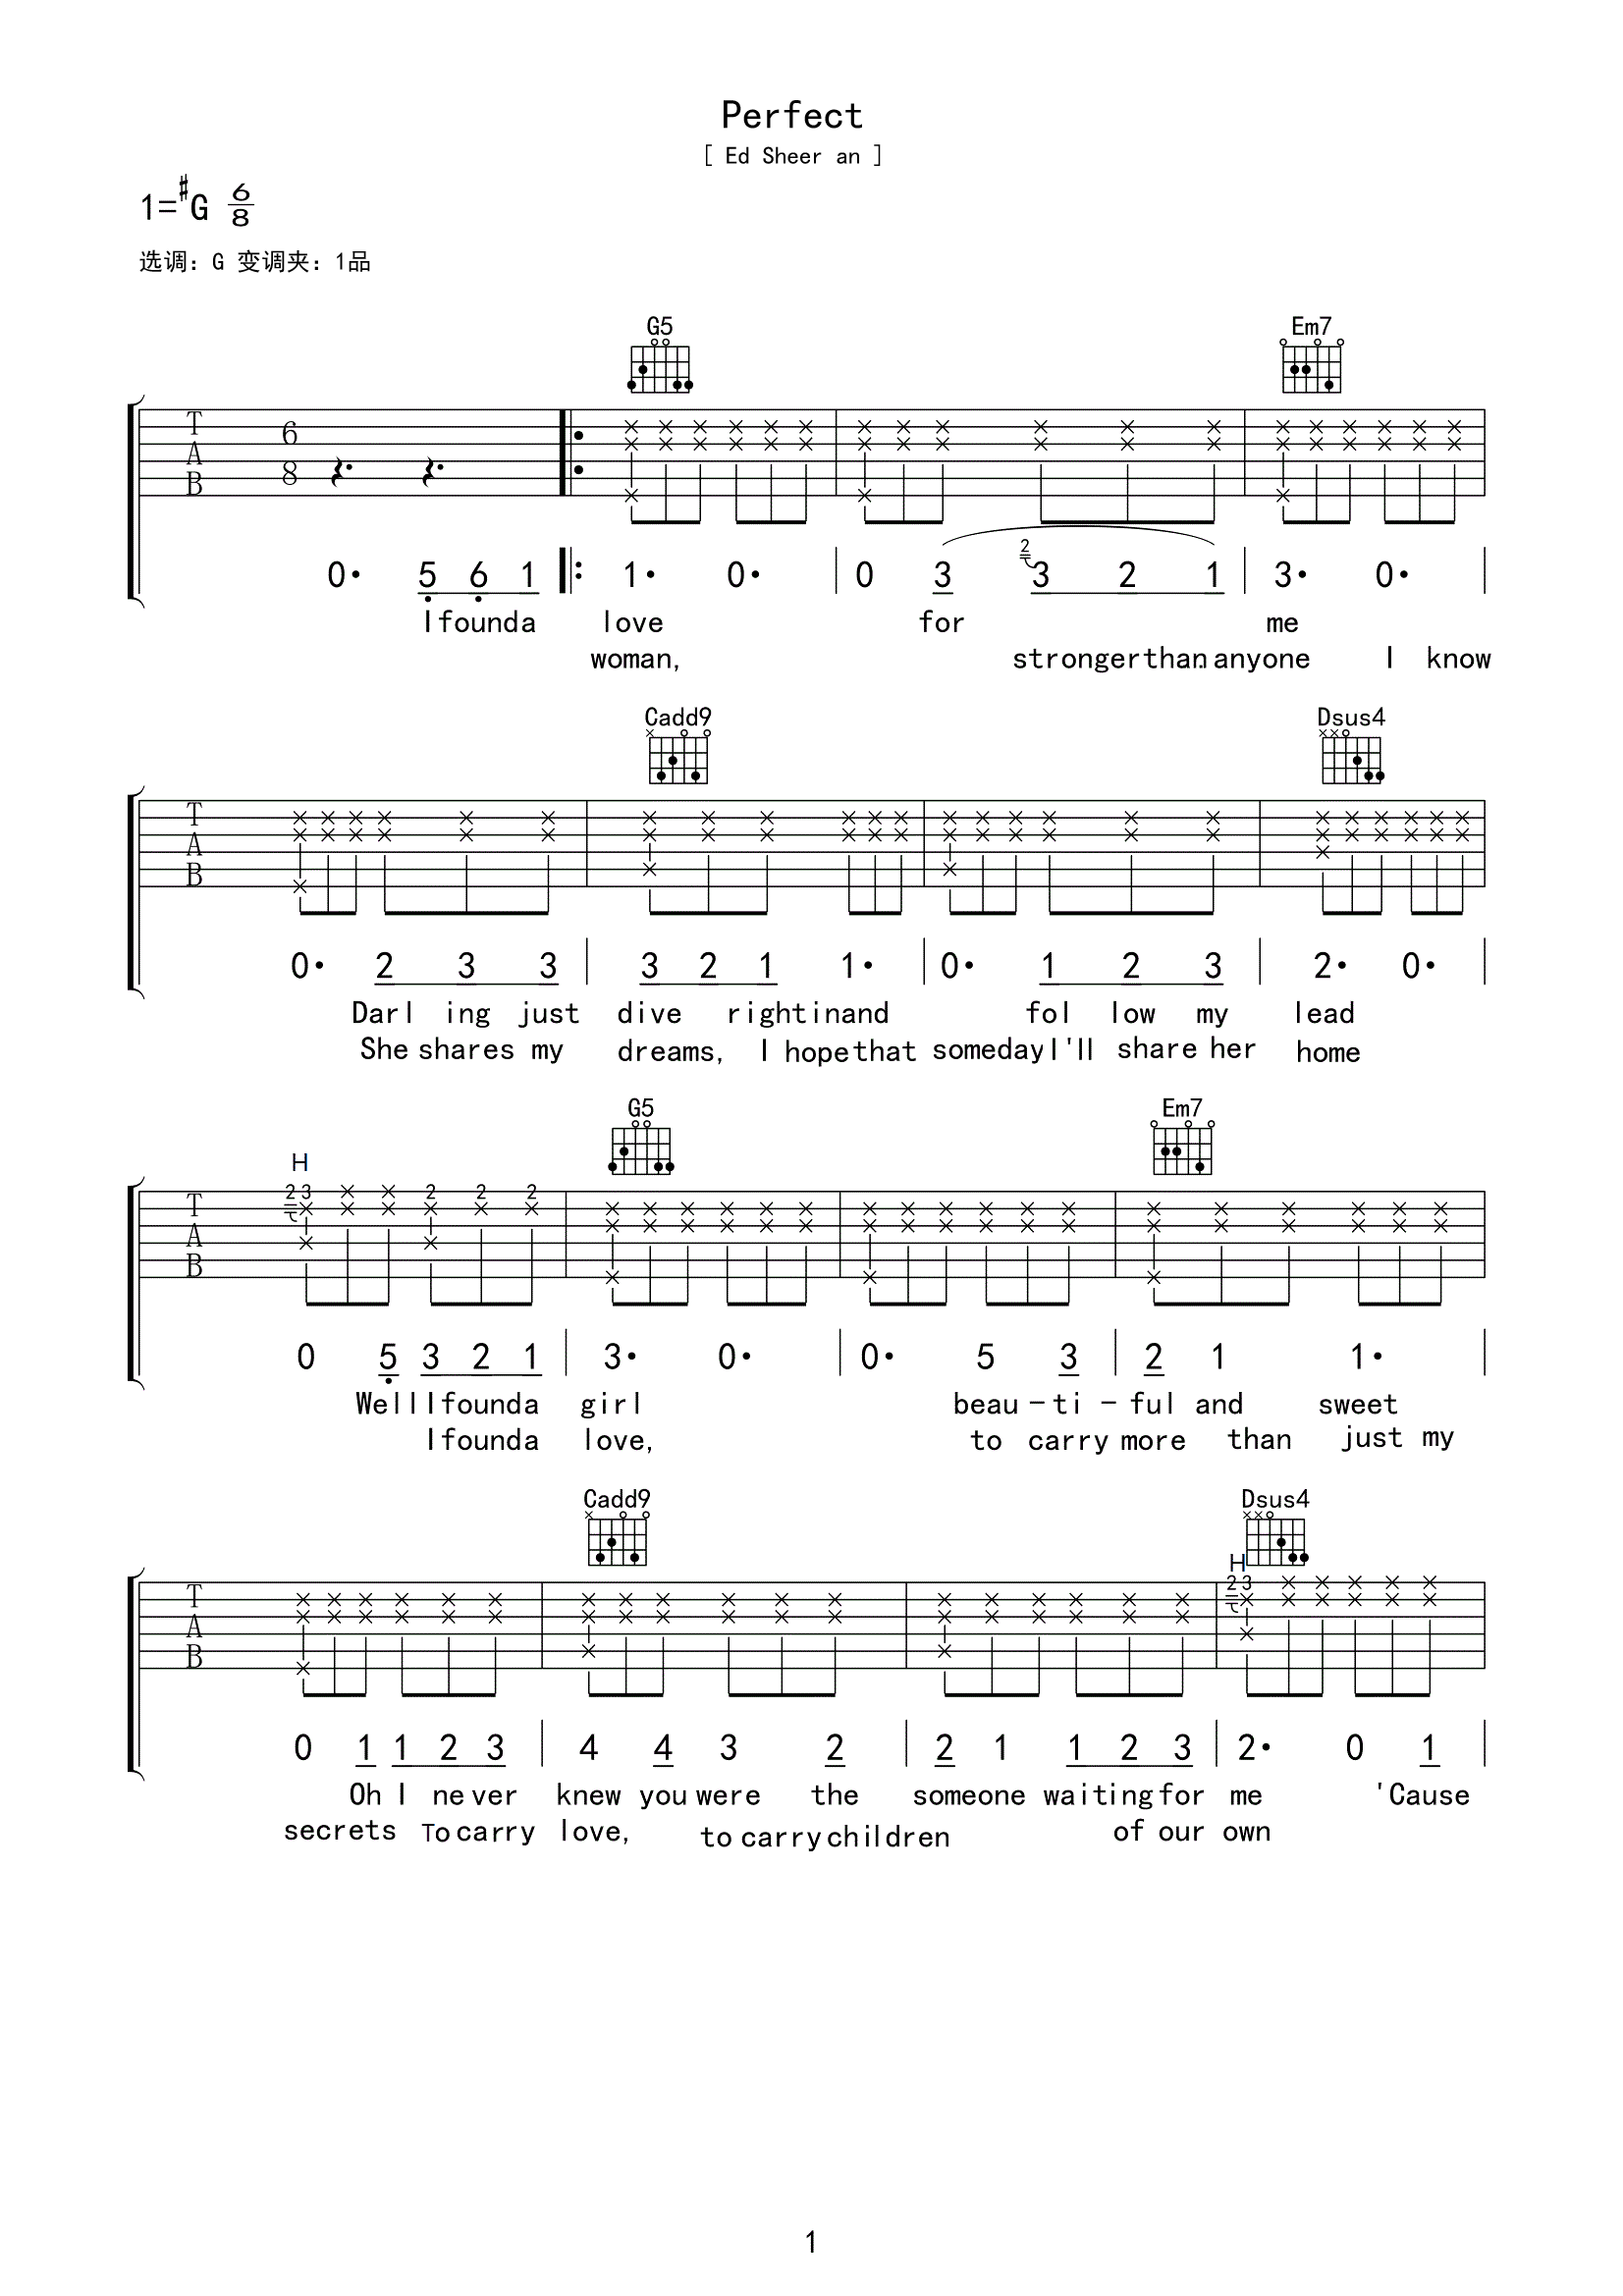 Perfect by Ed Sheeran - Easy Guitar Tab - Guitar Instructor